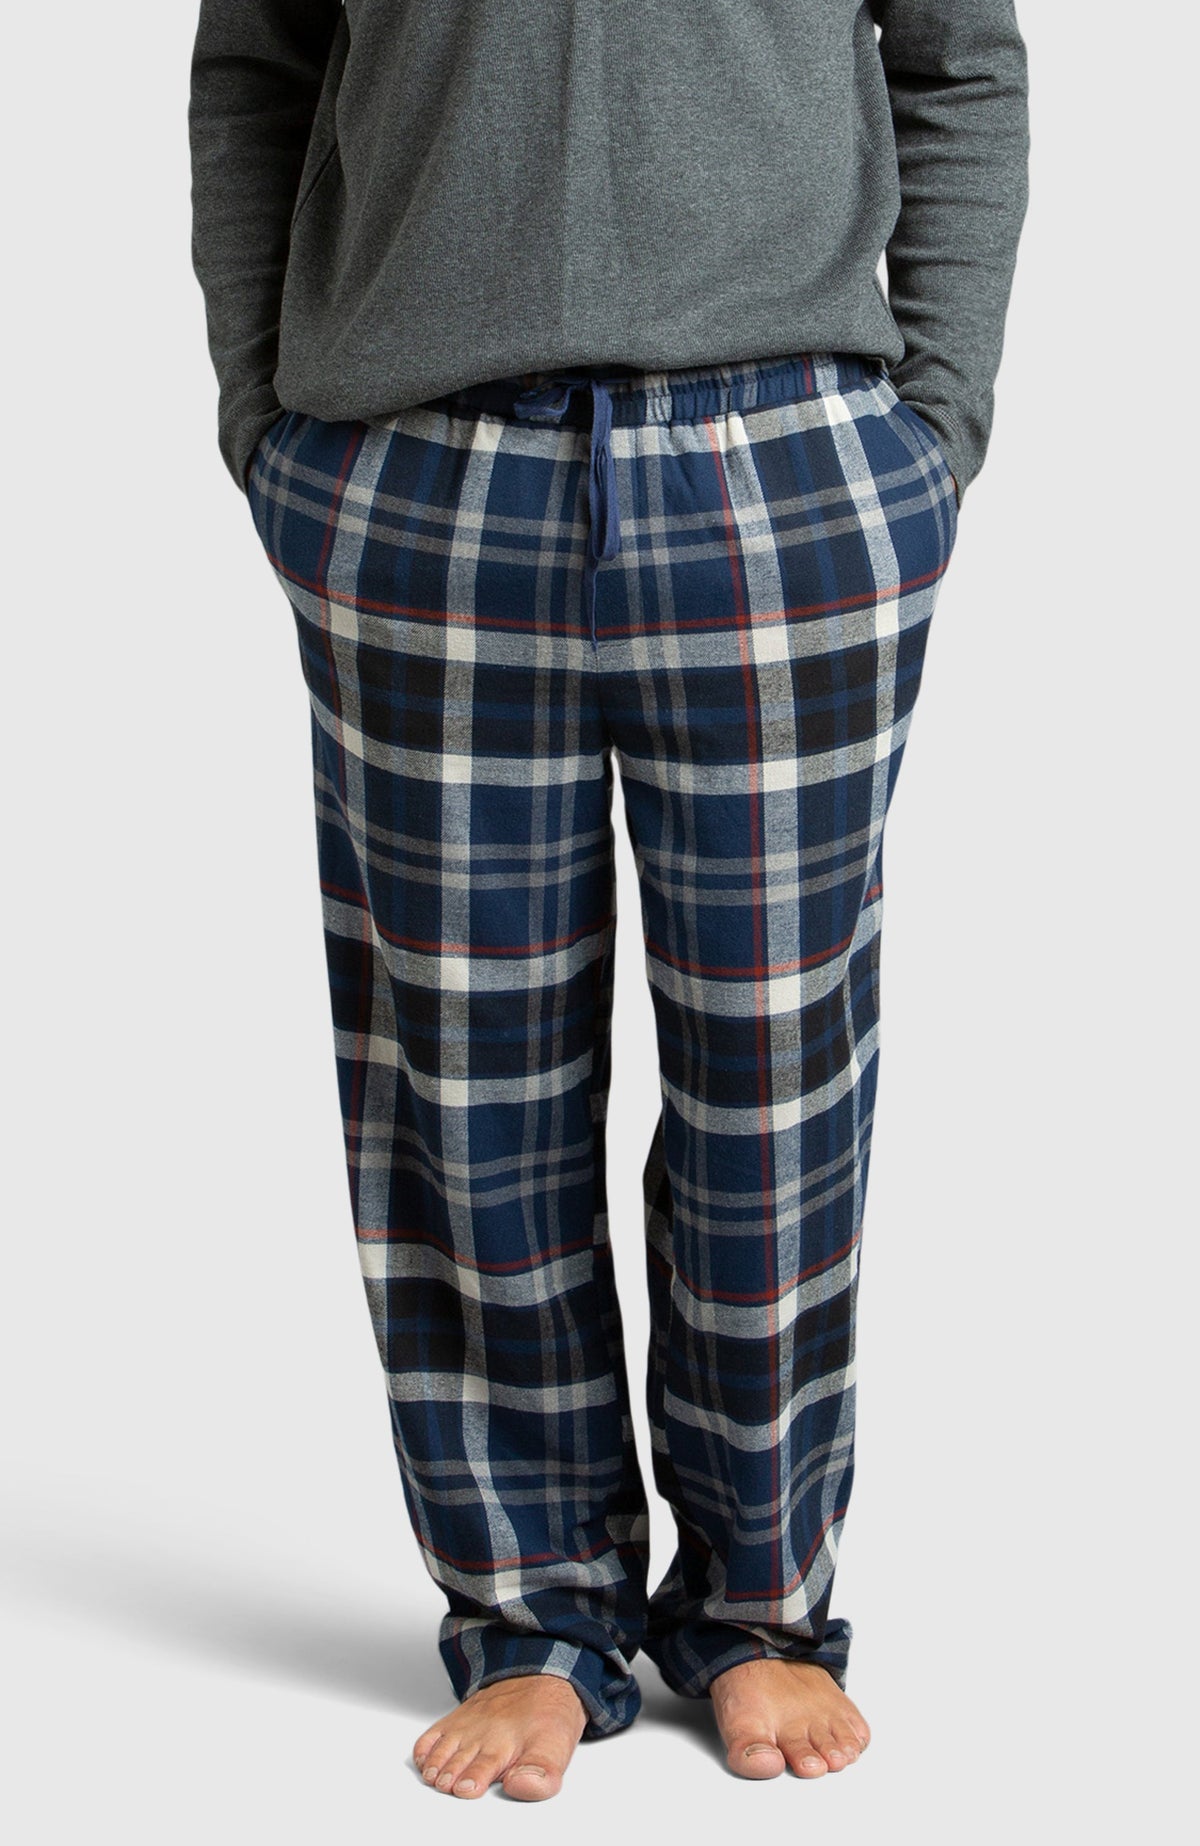 Blue & Black Flannel Plaid Pyjama for Men - Front